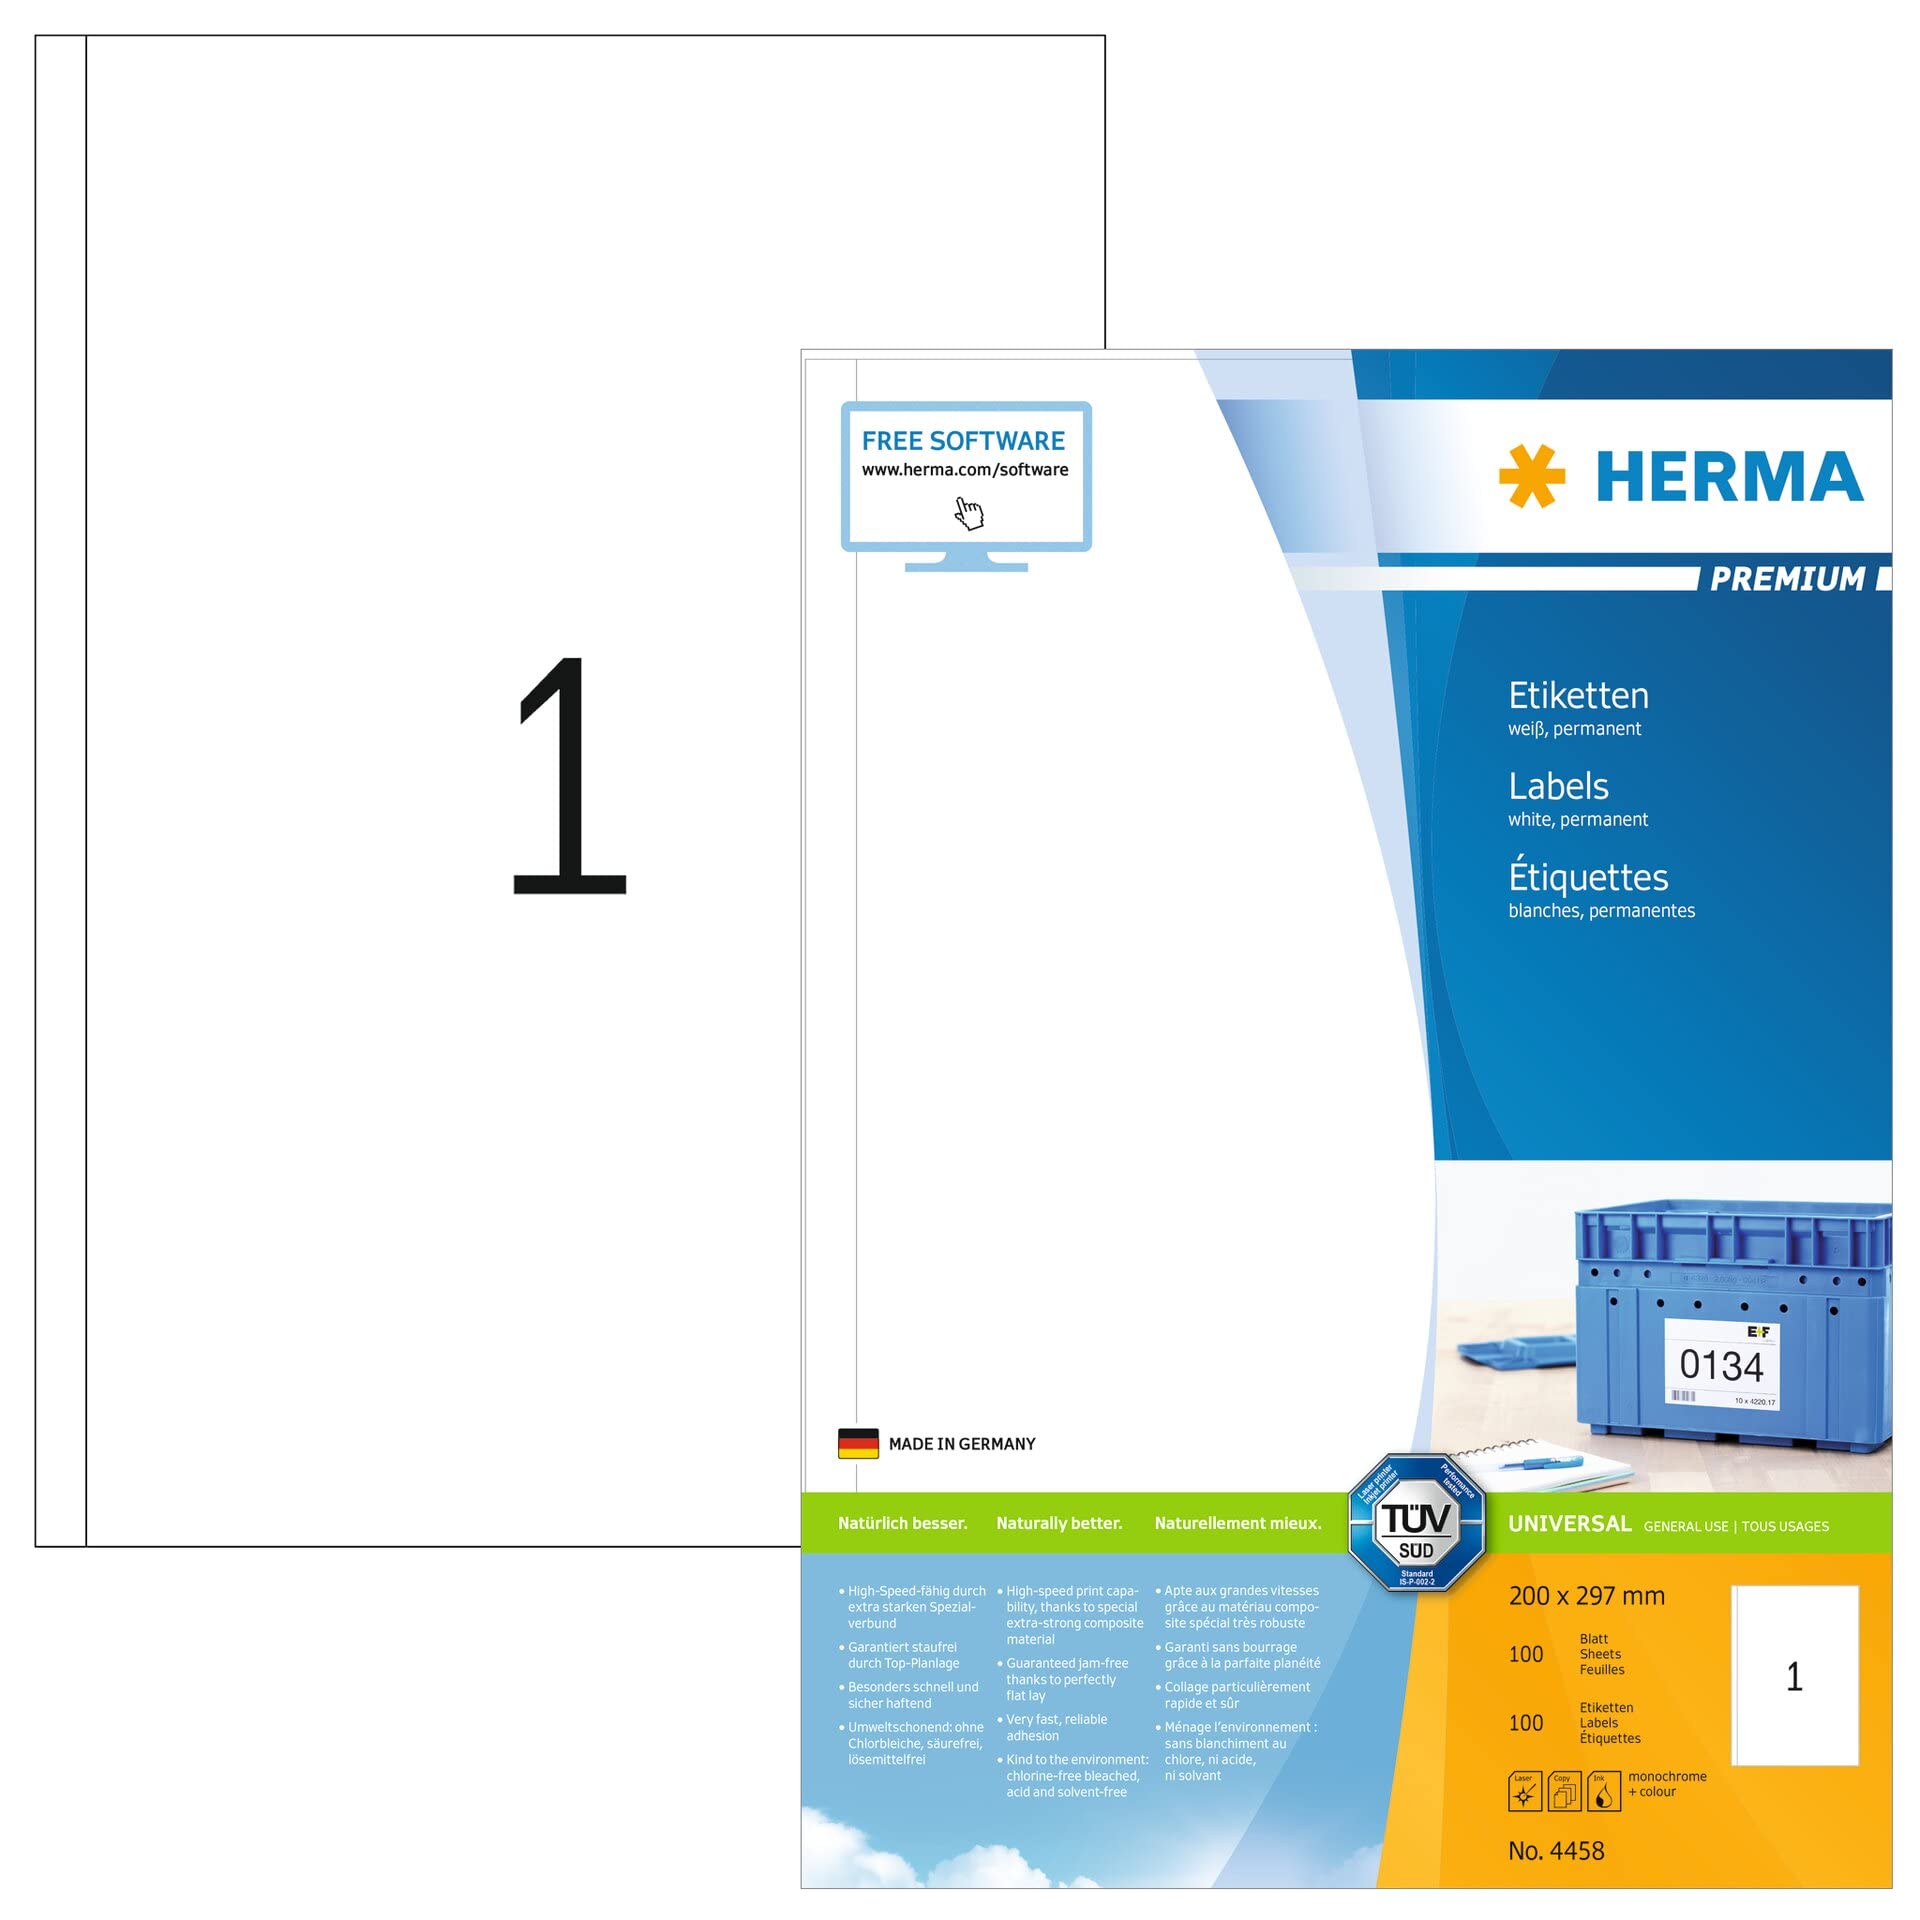 HERMA 4458 Universal Etiketten, 100 Blatt, 200 x 297 mm, 1 pro A4 Bogen, 100 Stück, selbstklebend, bedruckbar, matt, blanko Papier Klebeetiketten Aufkleber, weiß